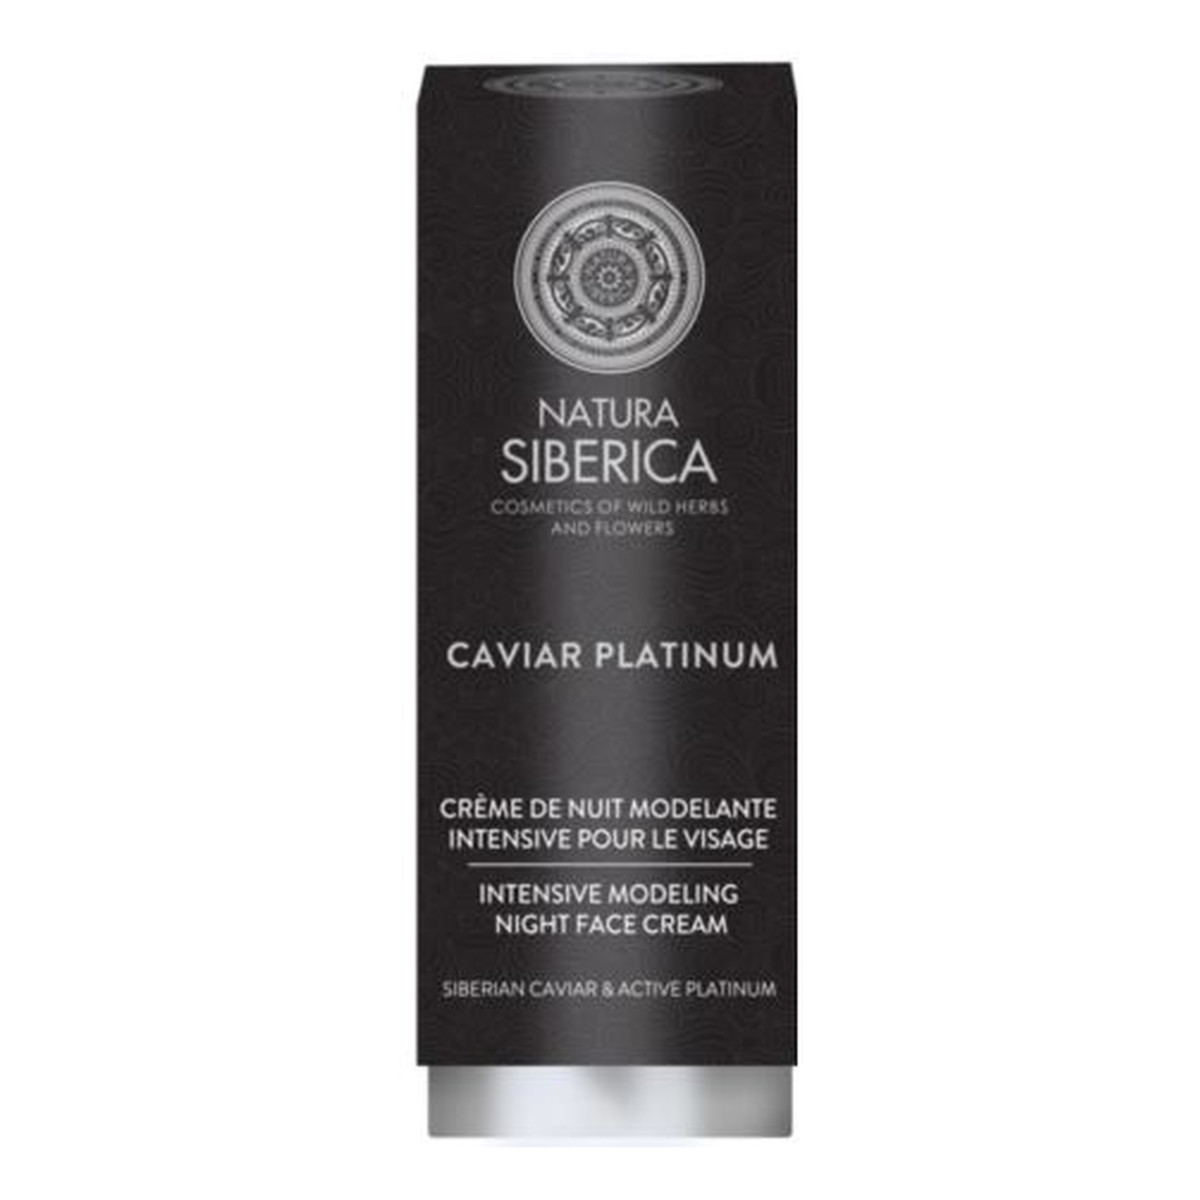 Natura Siberica Caviar Platinum Intensive Modeling Night Face Cream intensywnie modelujący krem do twarzy na noc 30ml